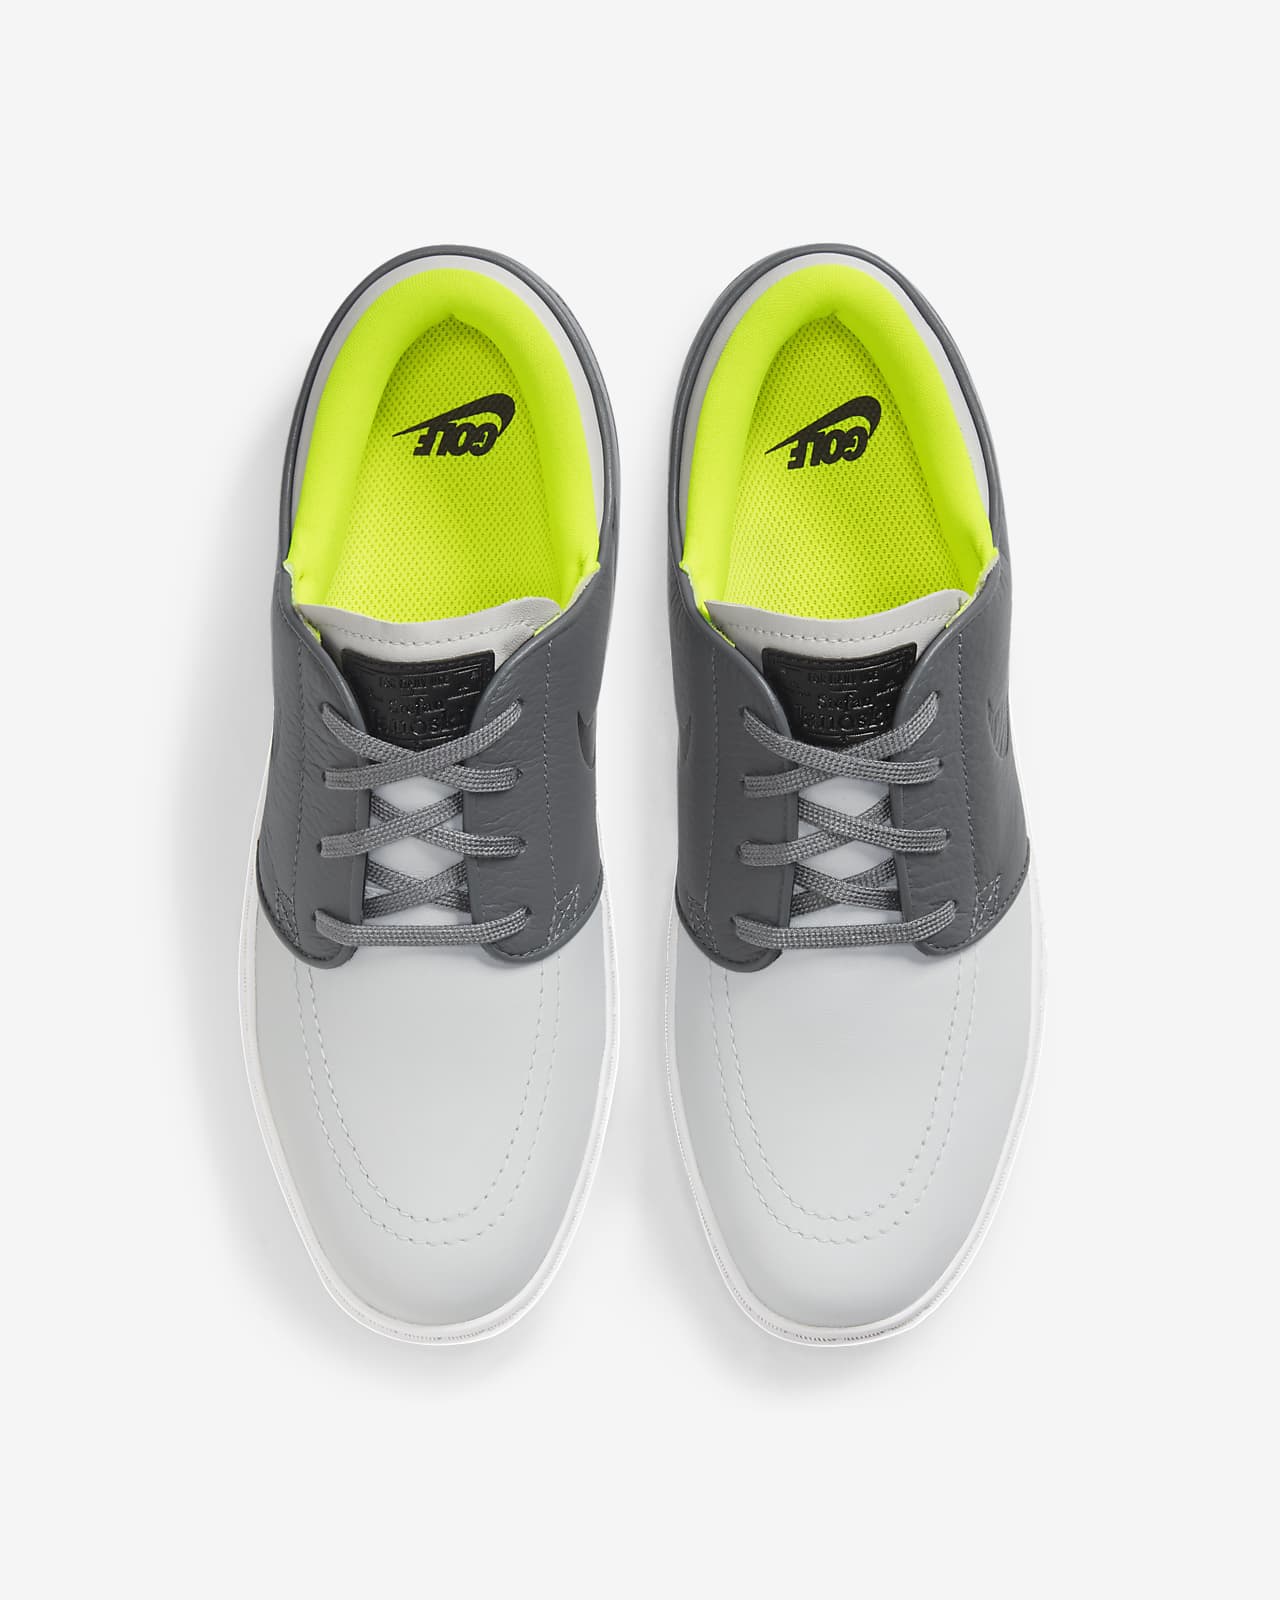 Nike Janoski G Men's Golf Shoe.